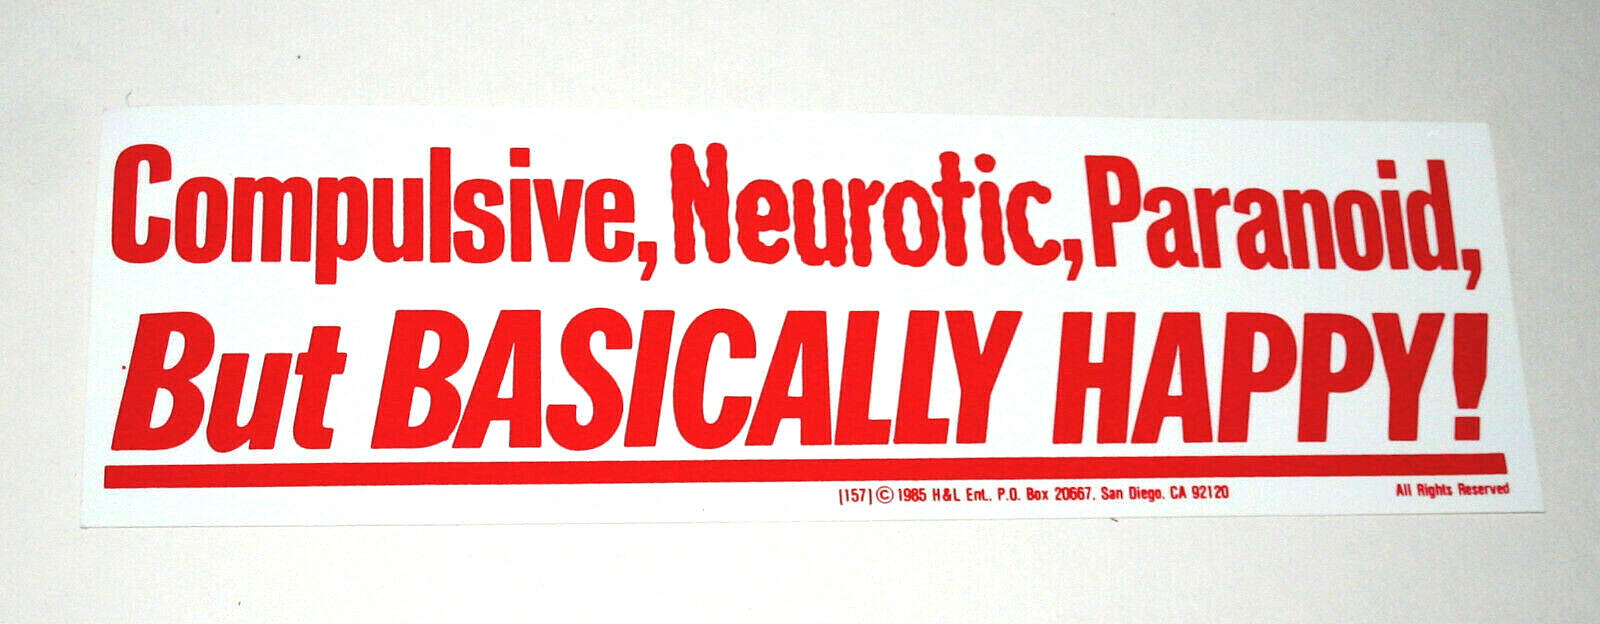 Vtg Campy Slogan Neurotic But Basically Happy Funny Bumper Sticker New NOS 1984